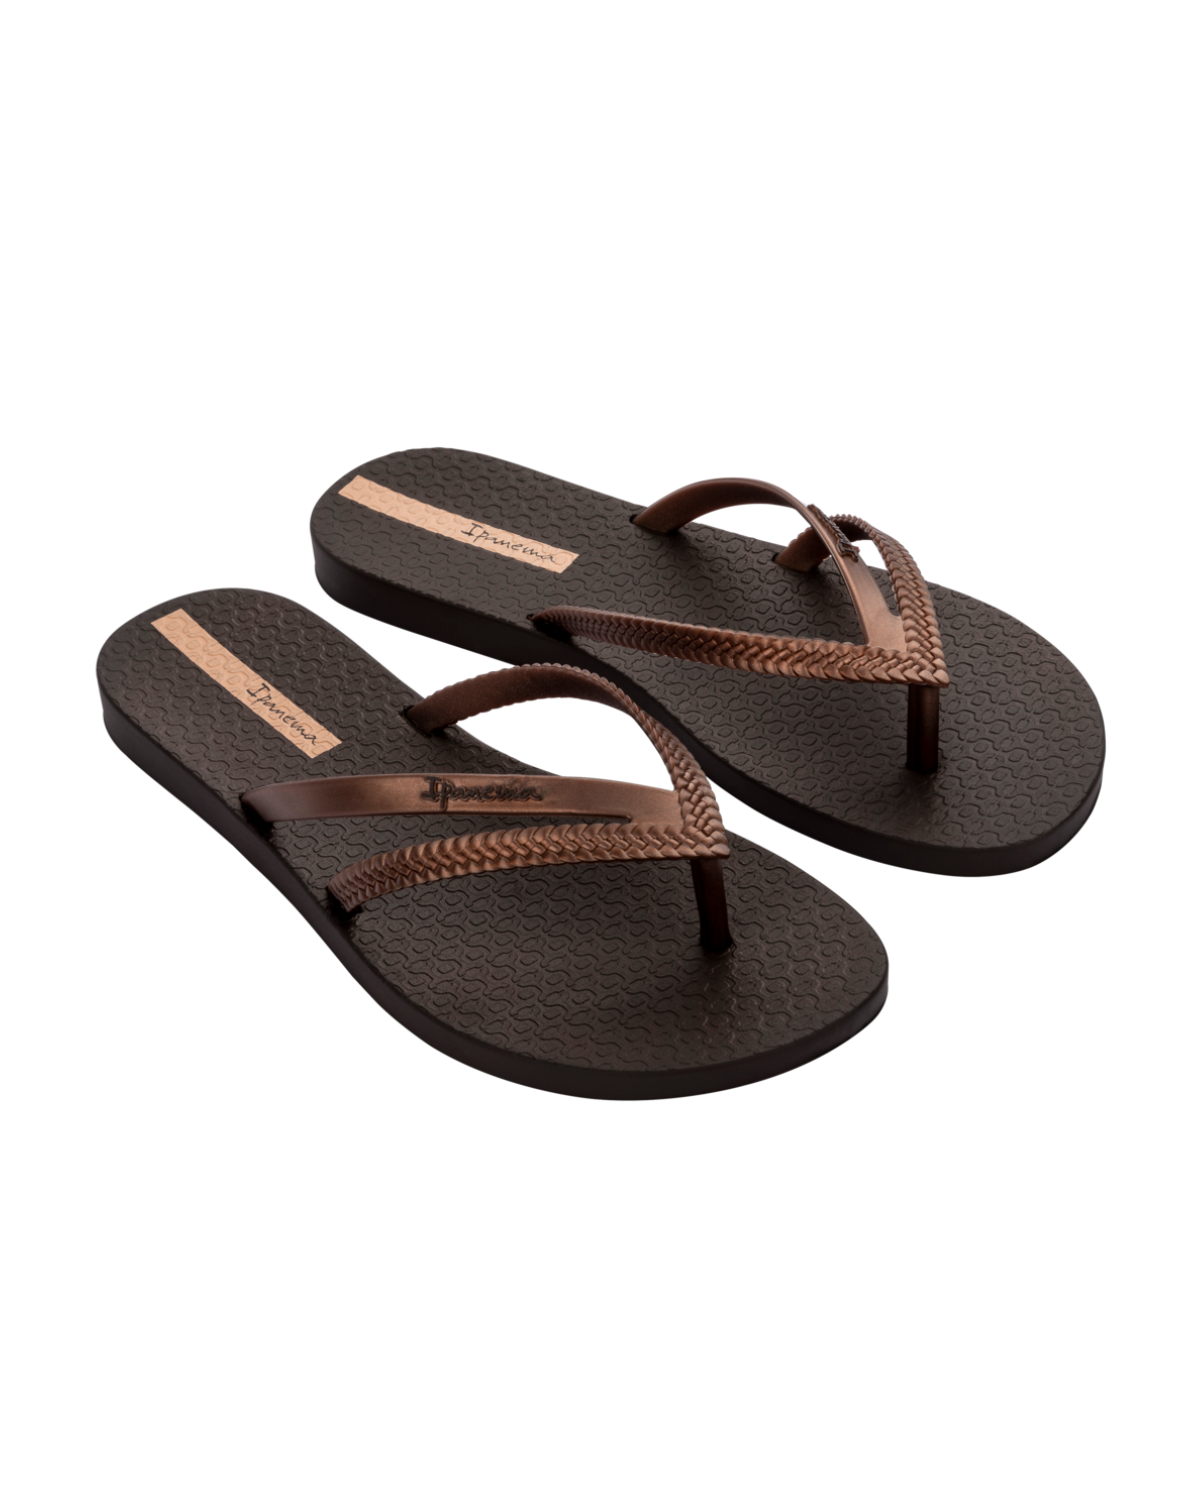 Ipanema Bossa Soft Flip Flop Sandals - 82067